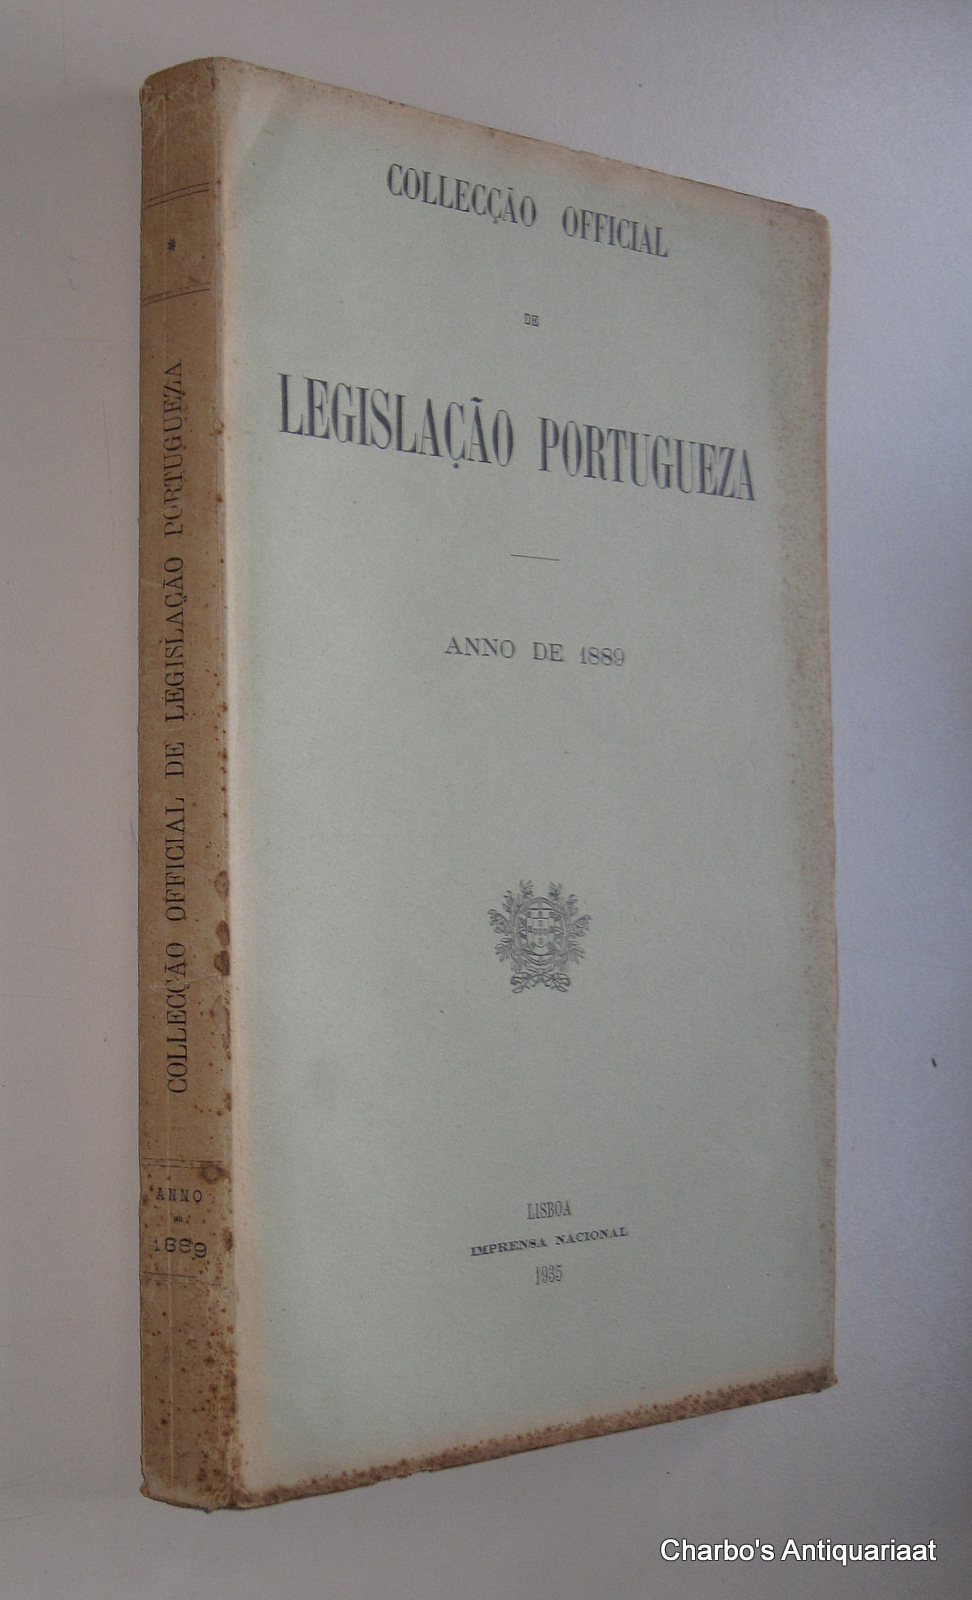 N/A, -  Colleco official de legislao portugueza, anno de 1889.